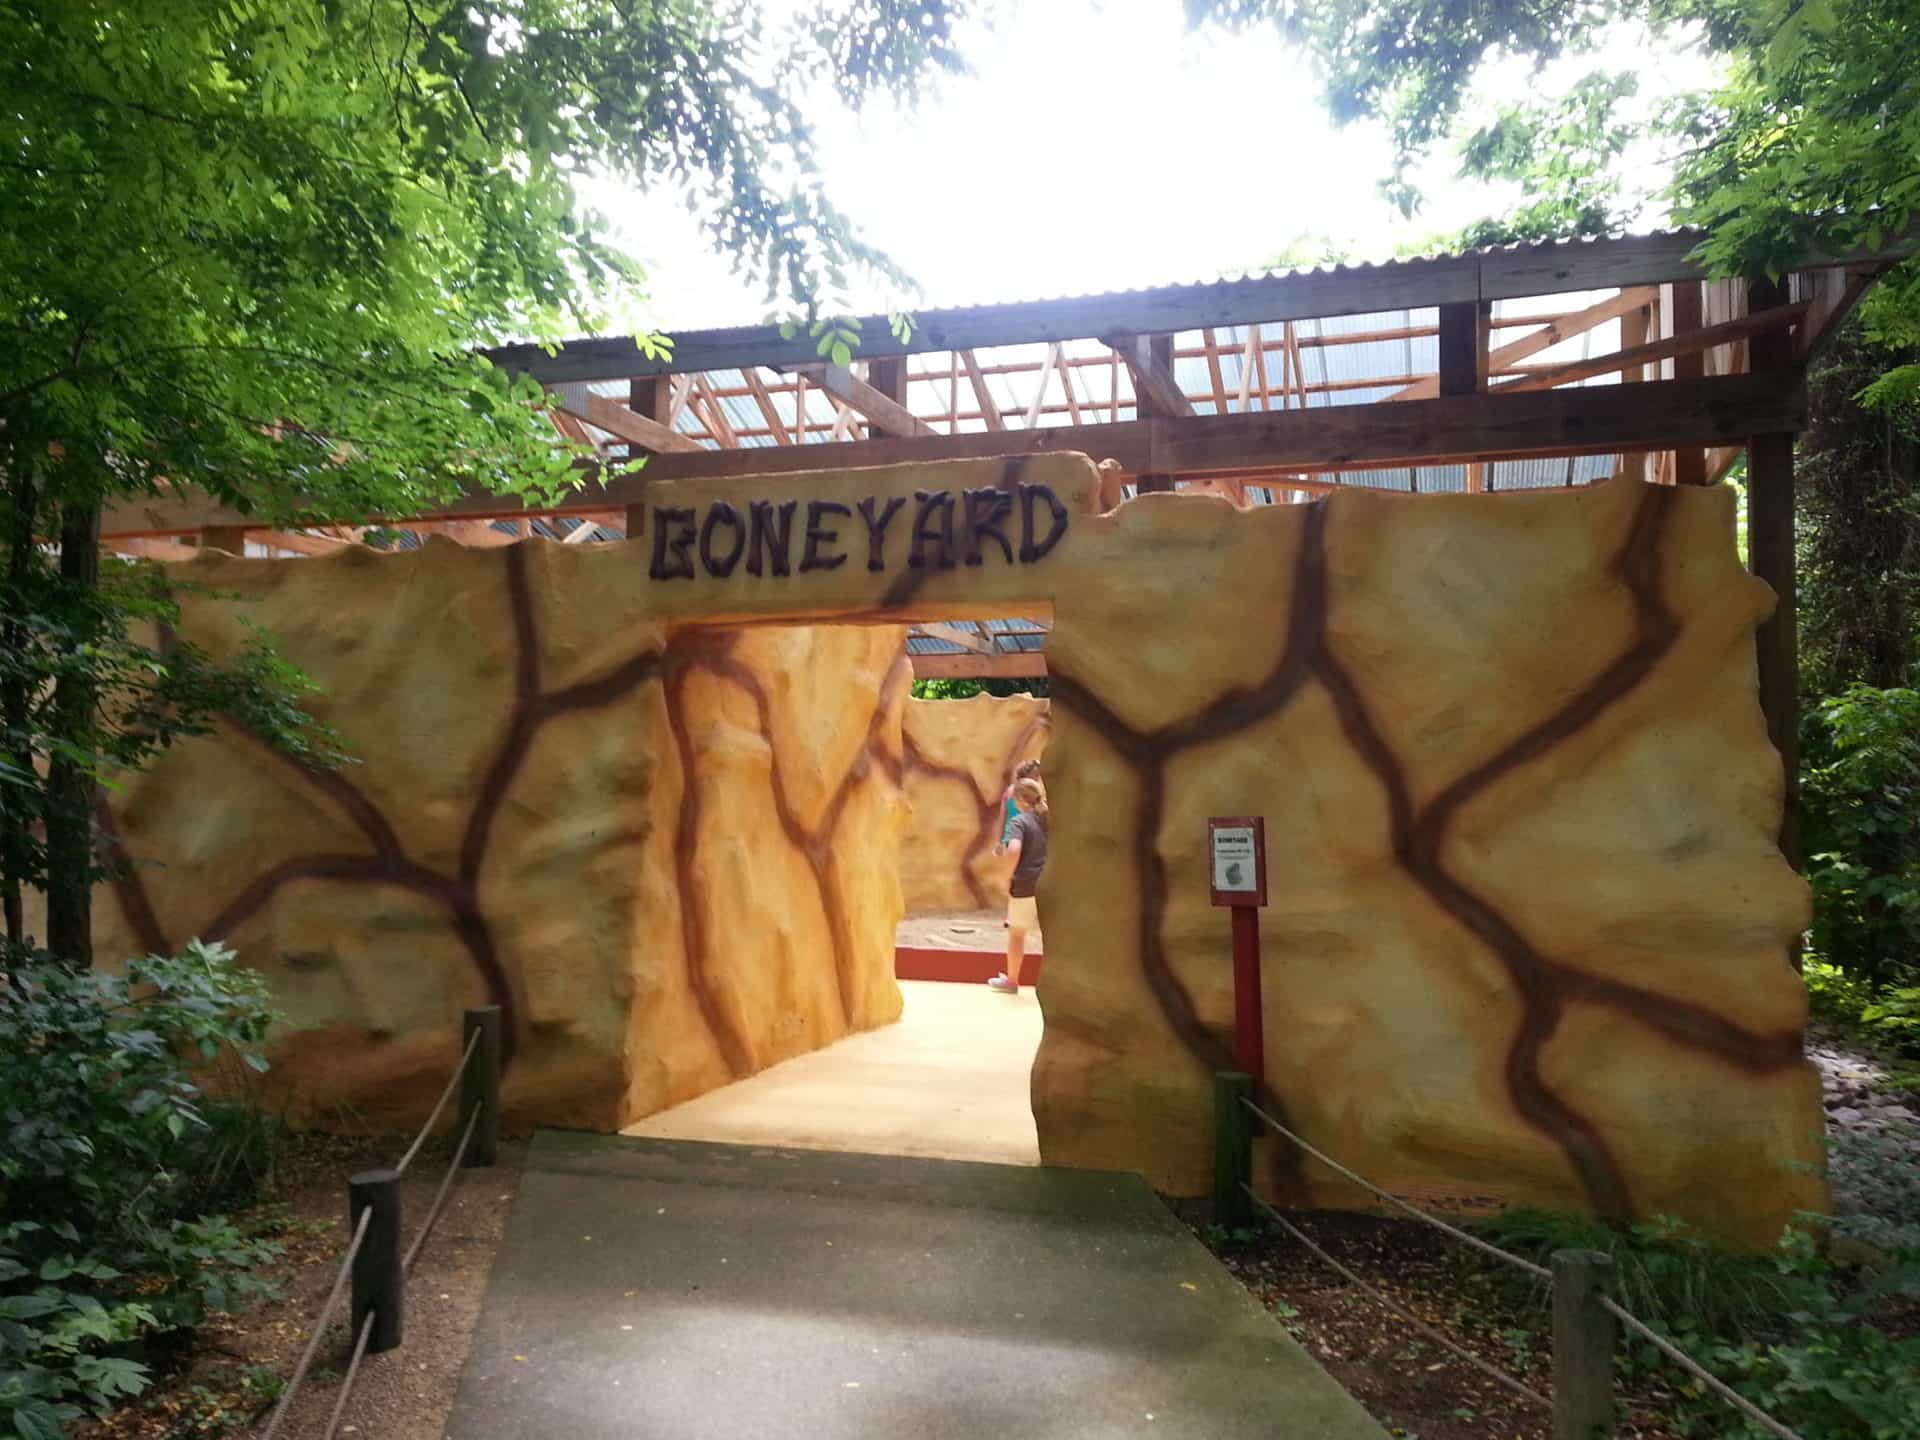 Dinosaur World boneyard entryway